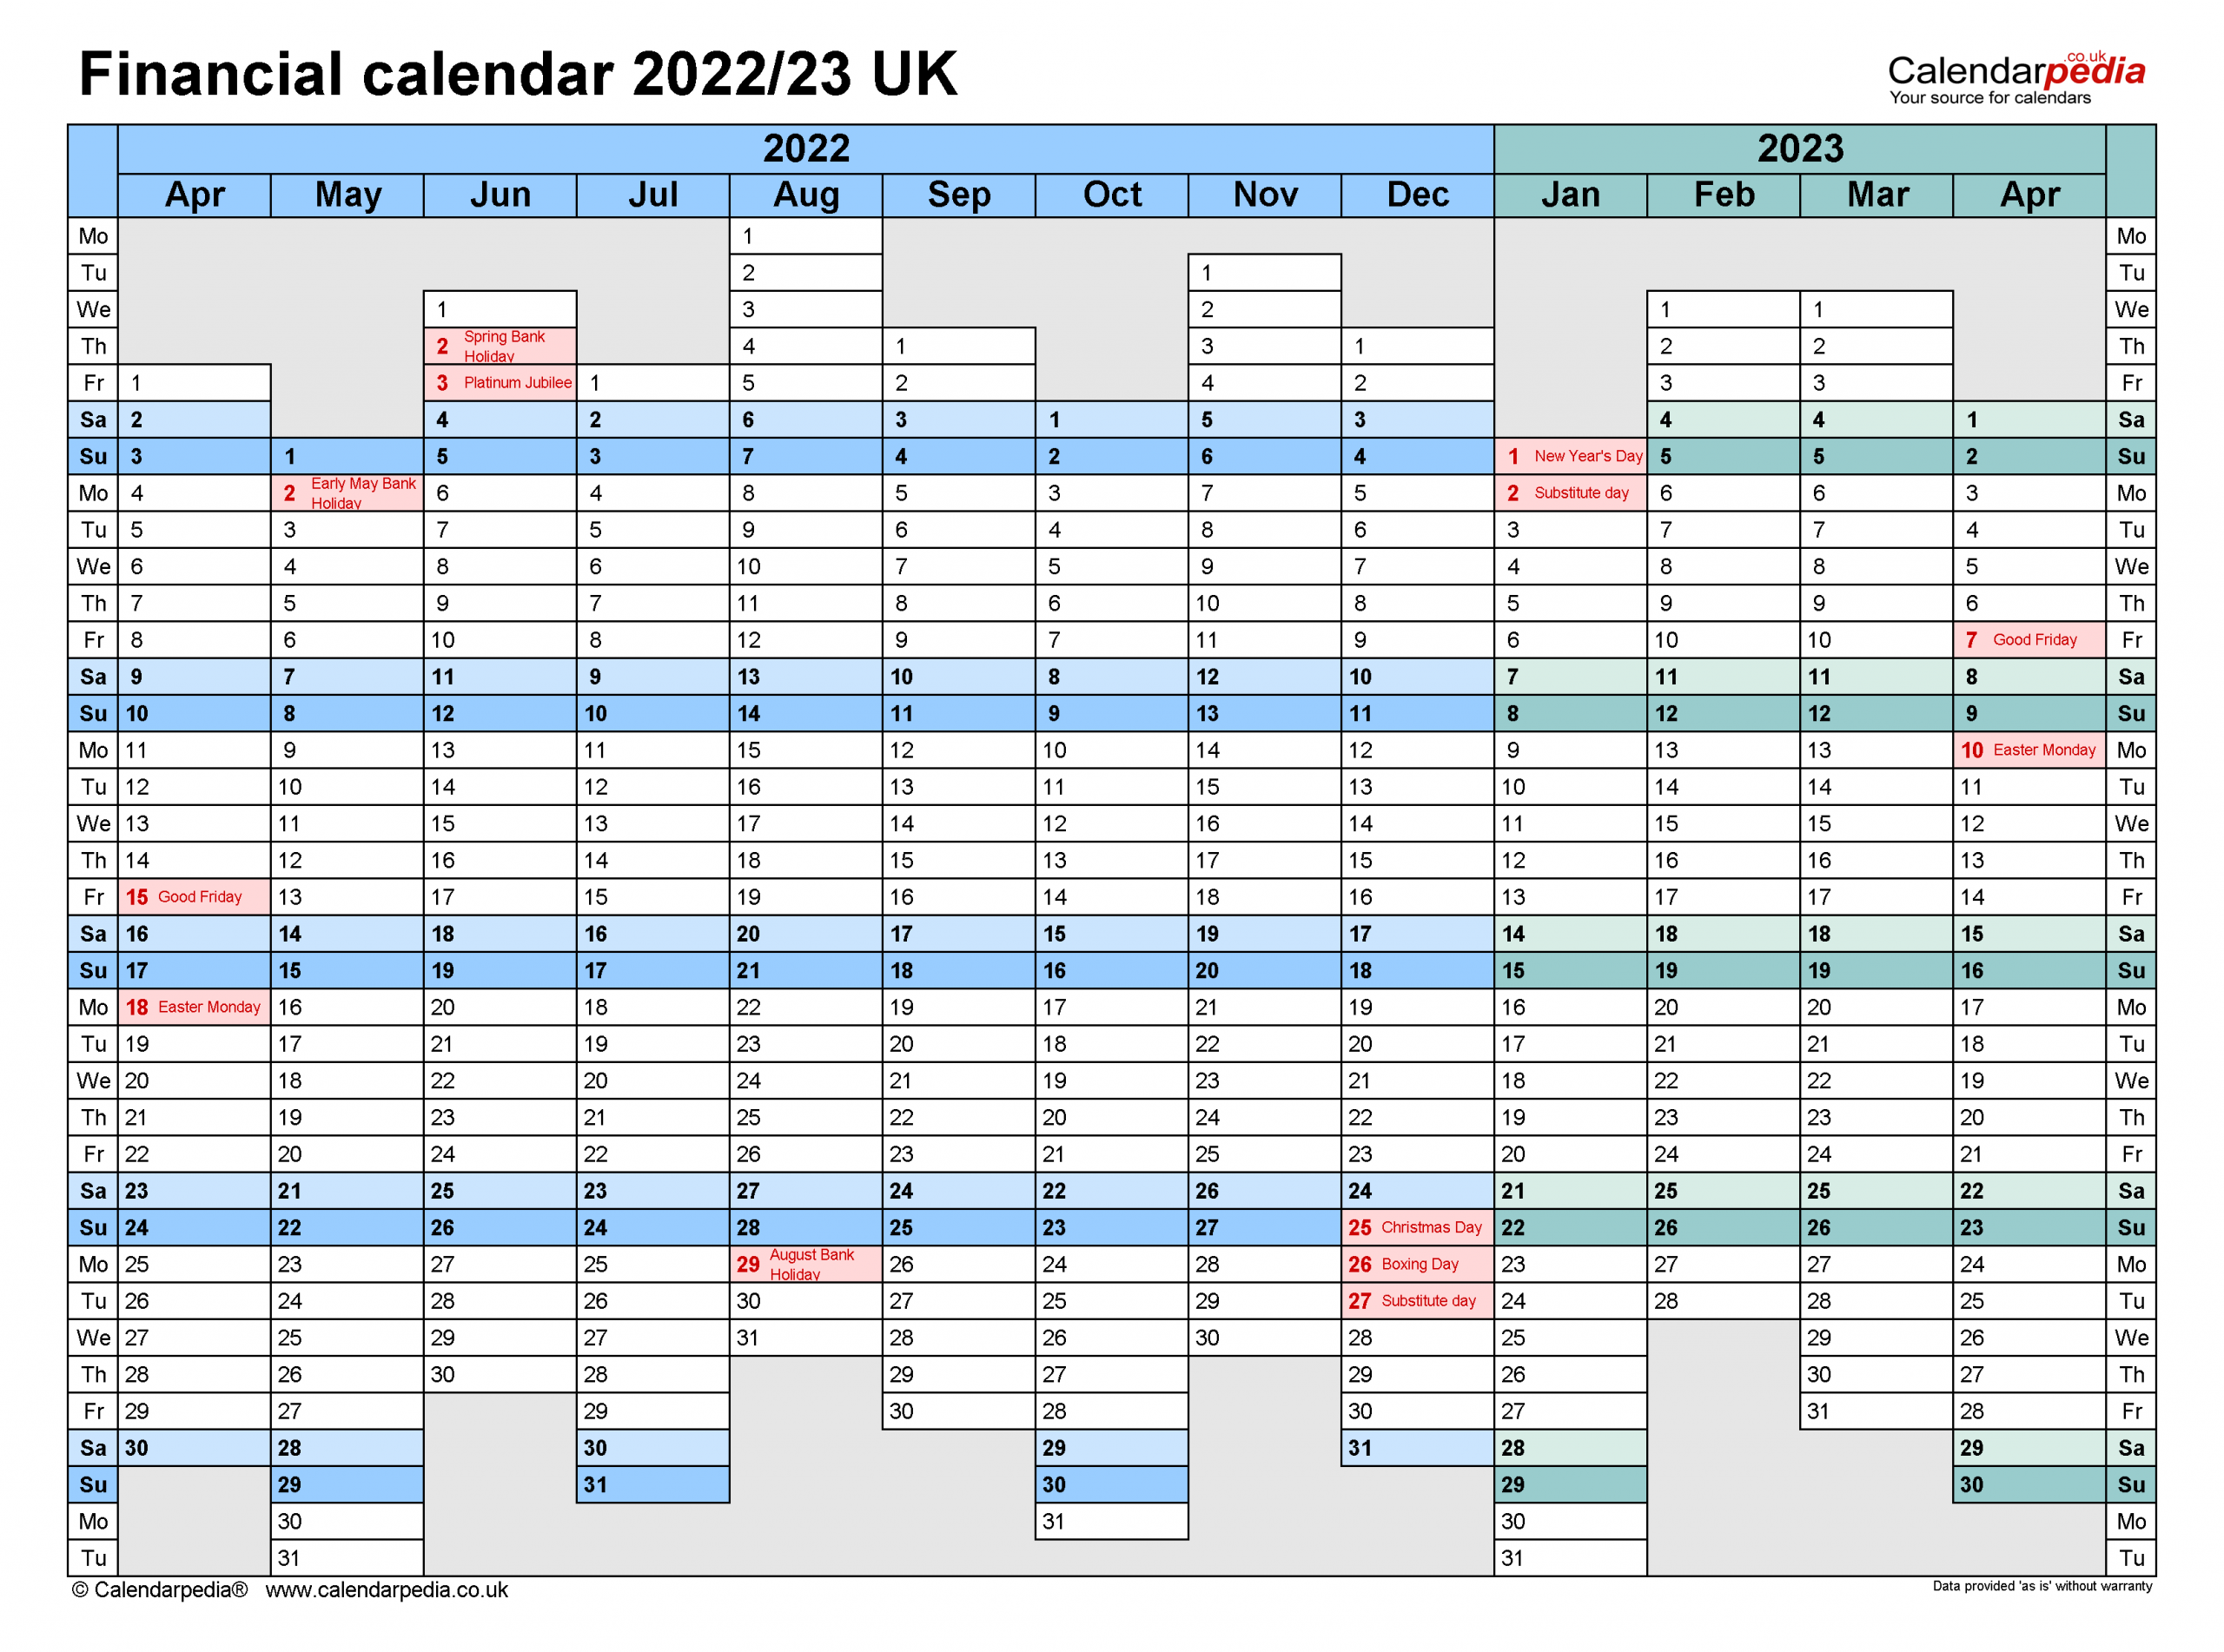 Financial Calendars 2022/23 Uk In Pdf Format